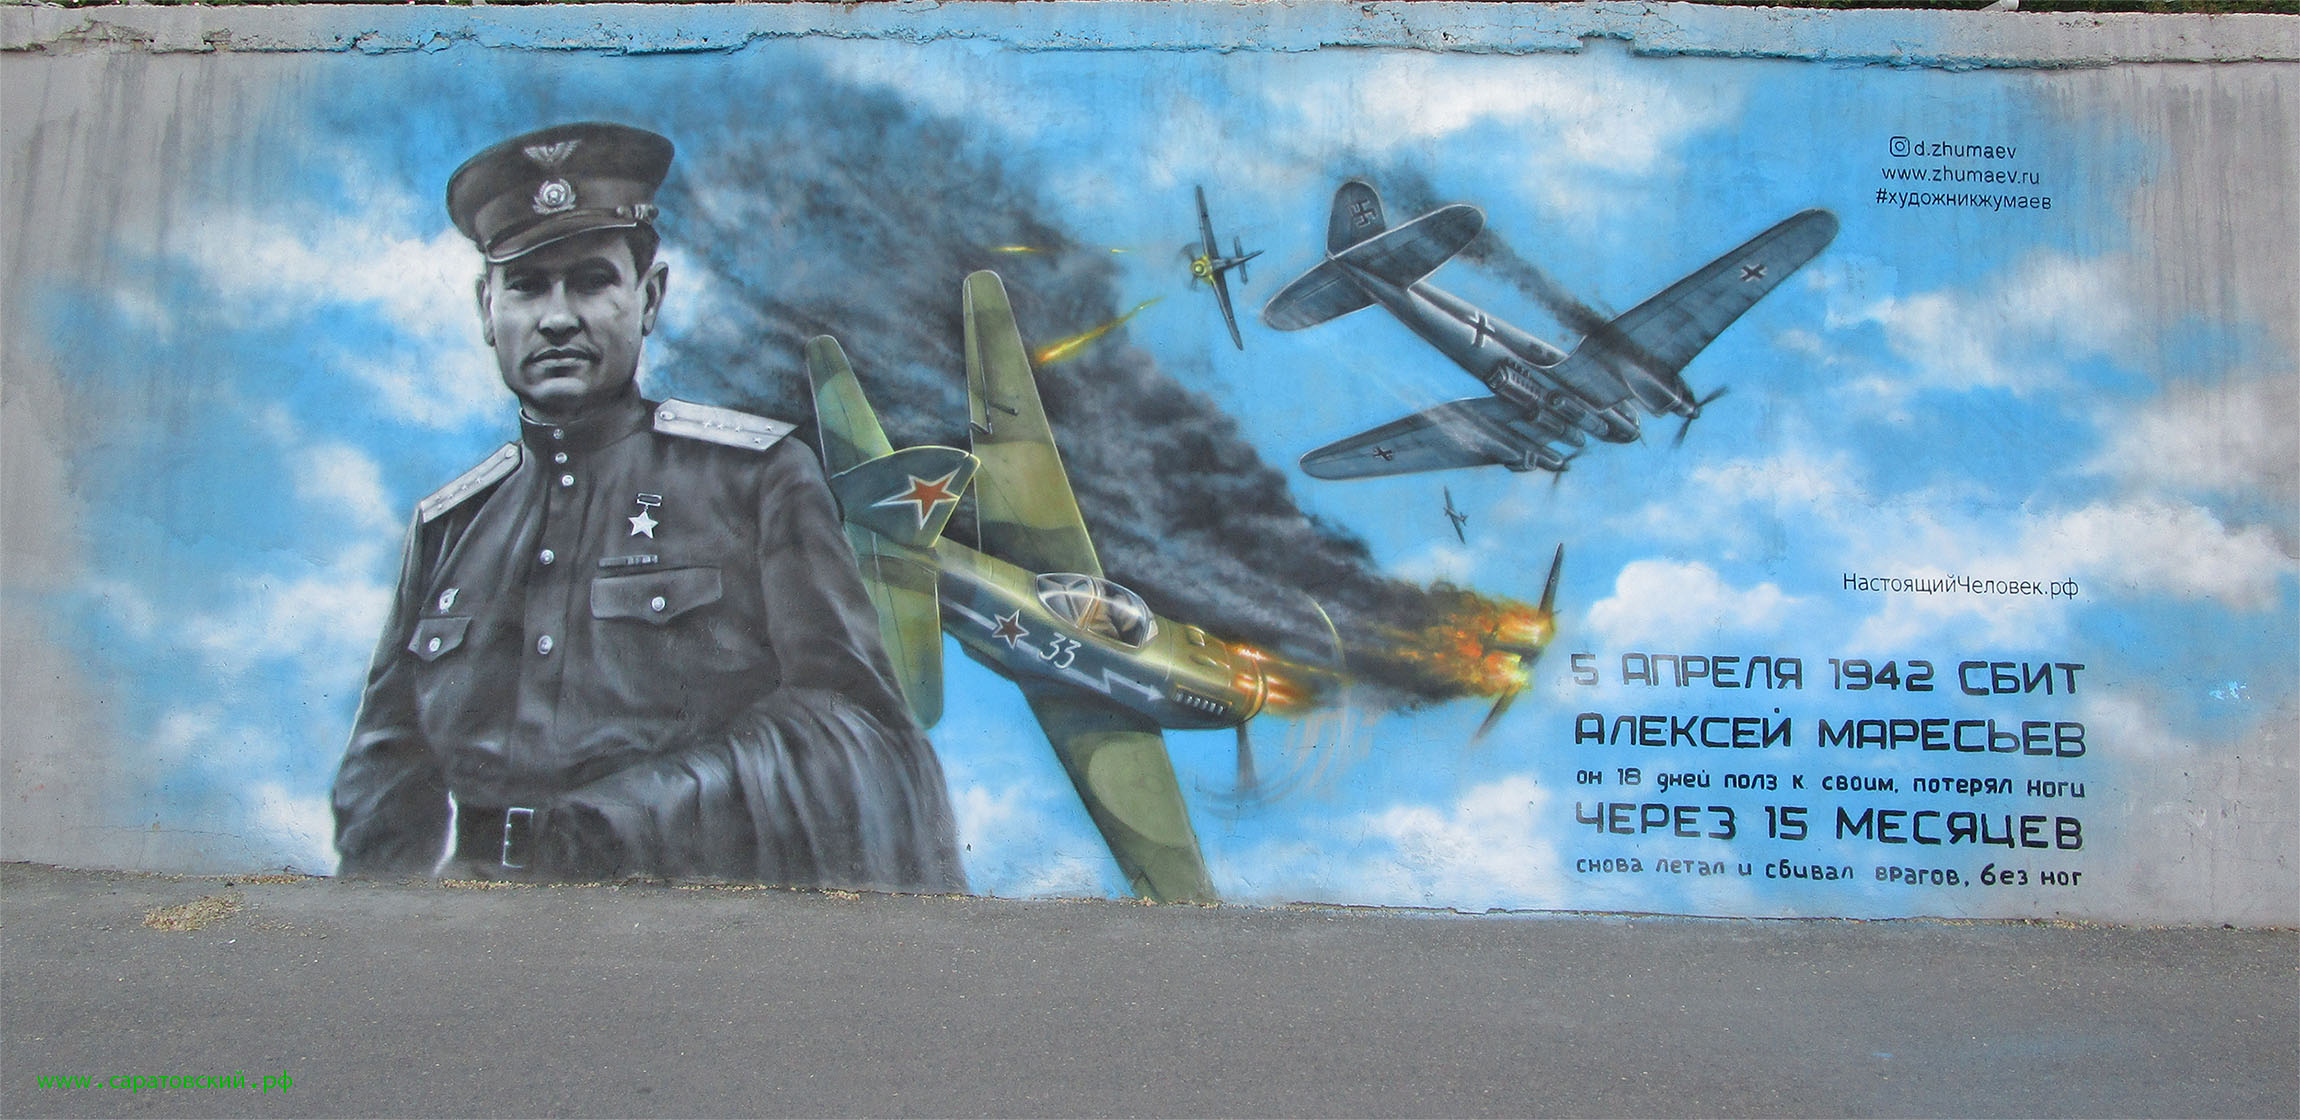 Saratov embankment graffiti: Alexey Maresyev and Saratov, Russia